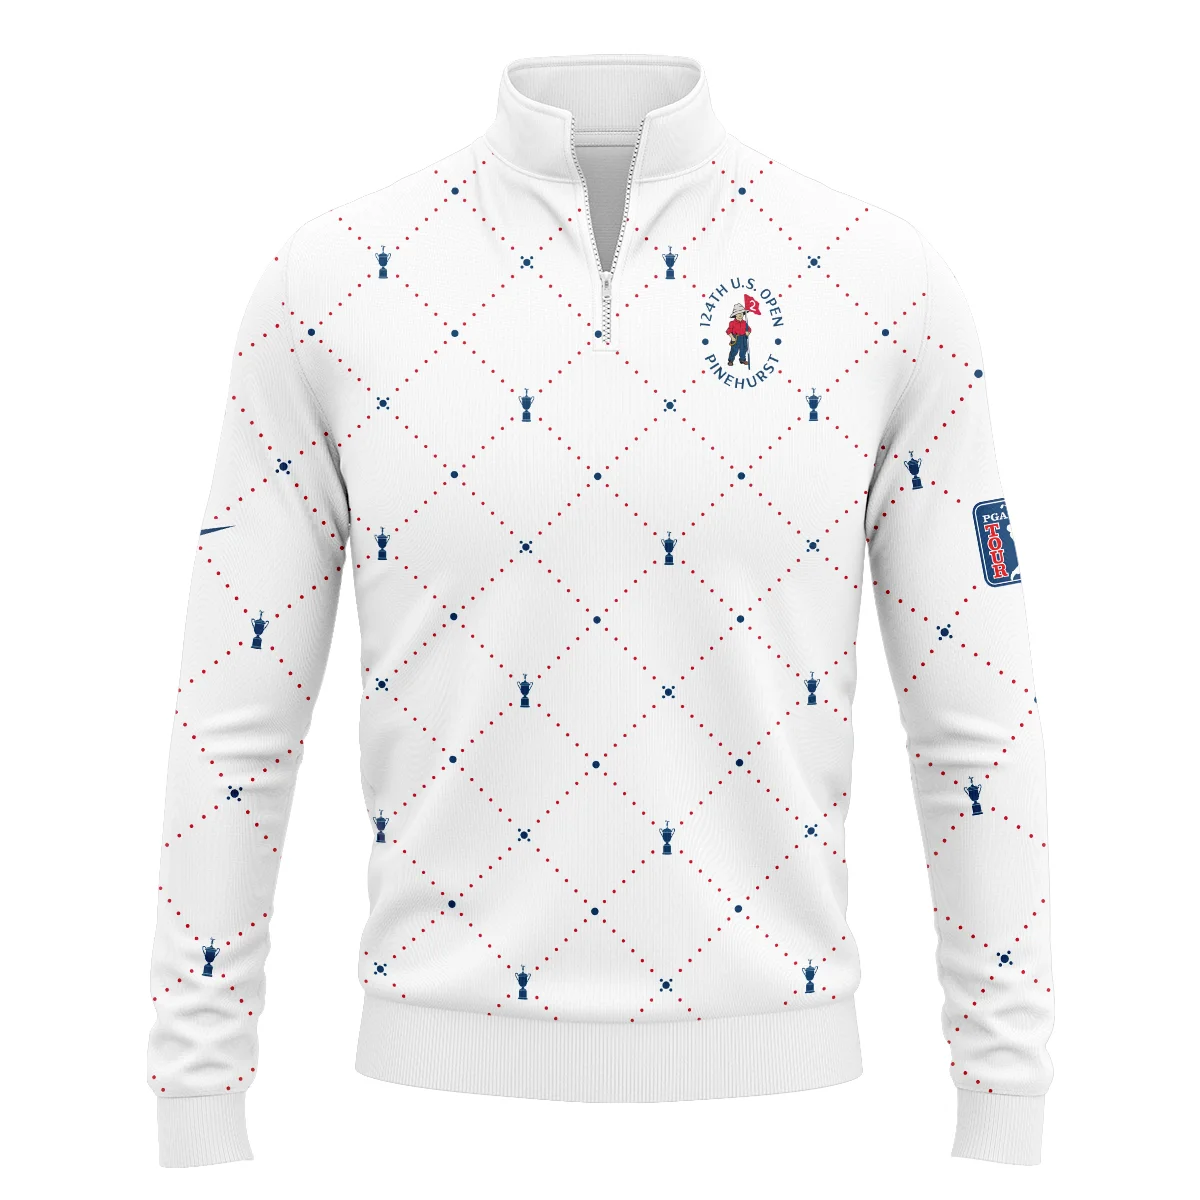 Argyle Pattern With Cup 124th U.S. Open Pinehurst Nike Unisex Sweatshirt Style Classic Sweatshirt